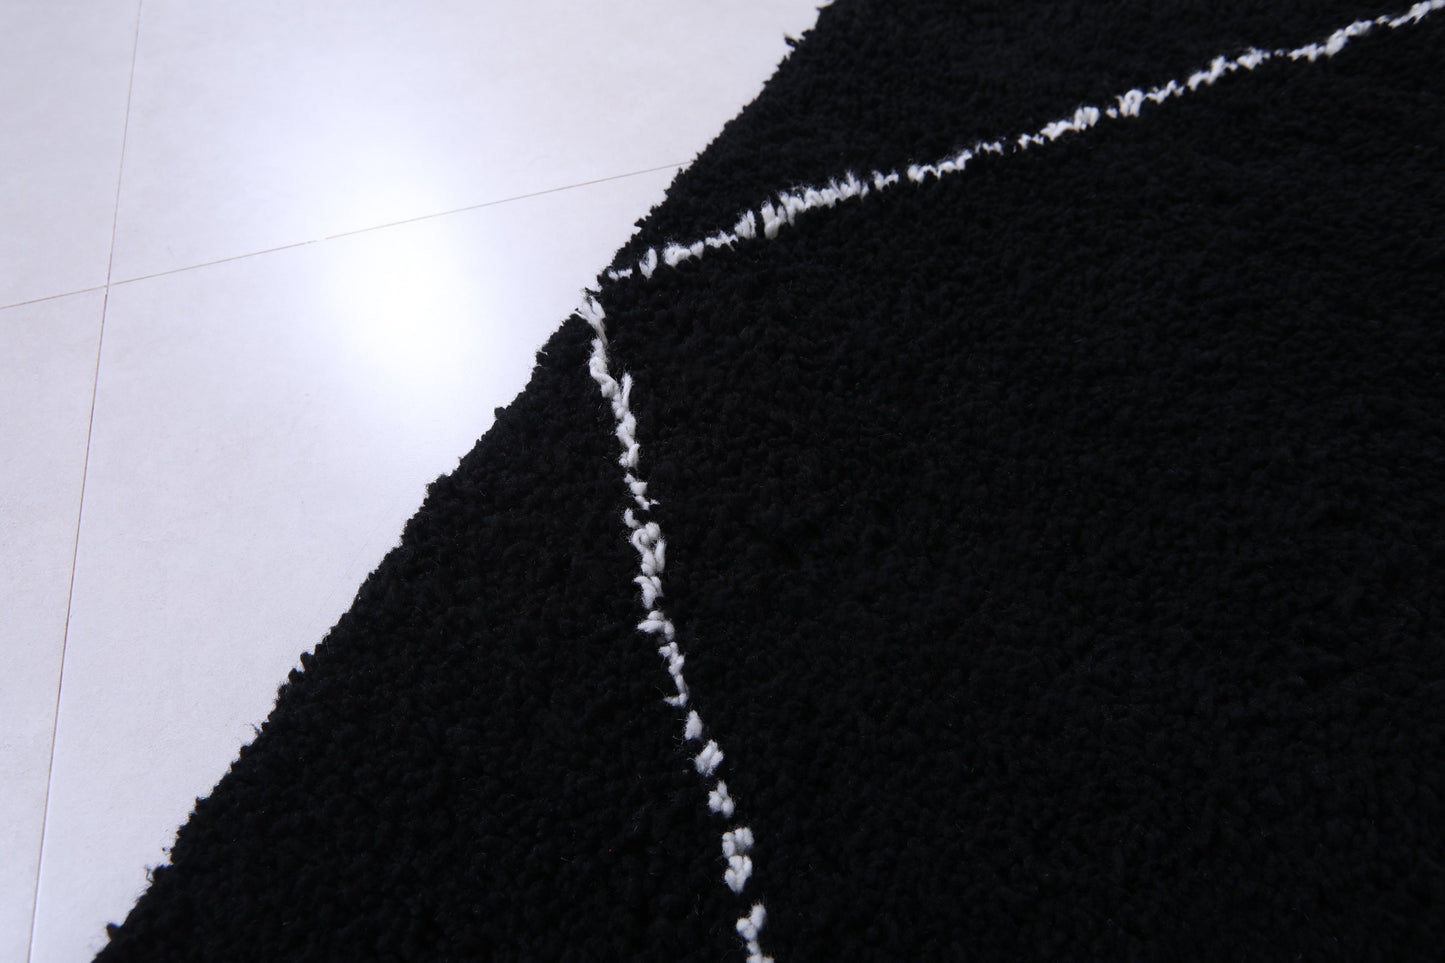 Beni ourain Black rug - Moroccan custom rug